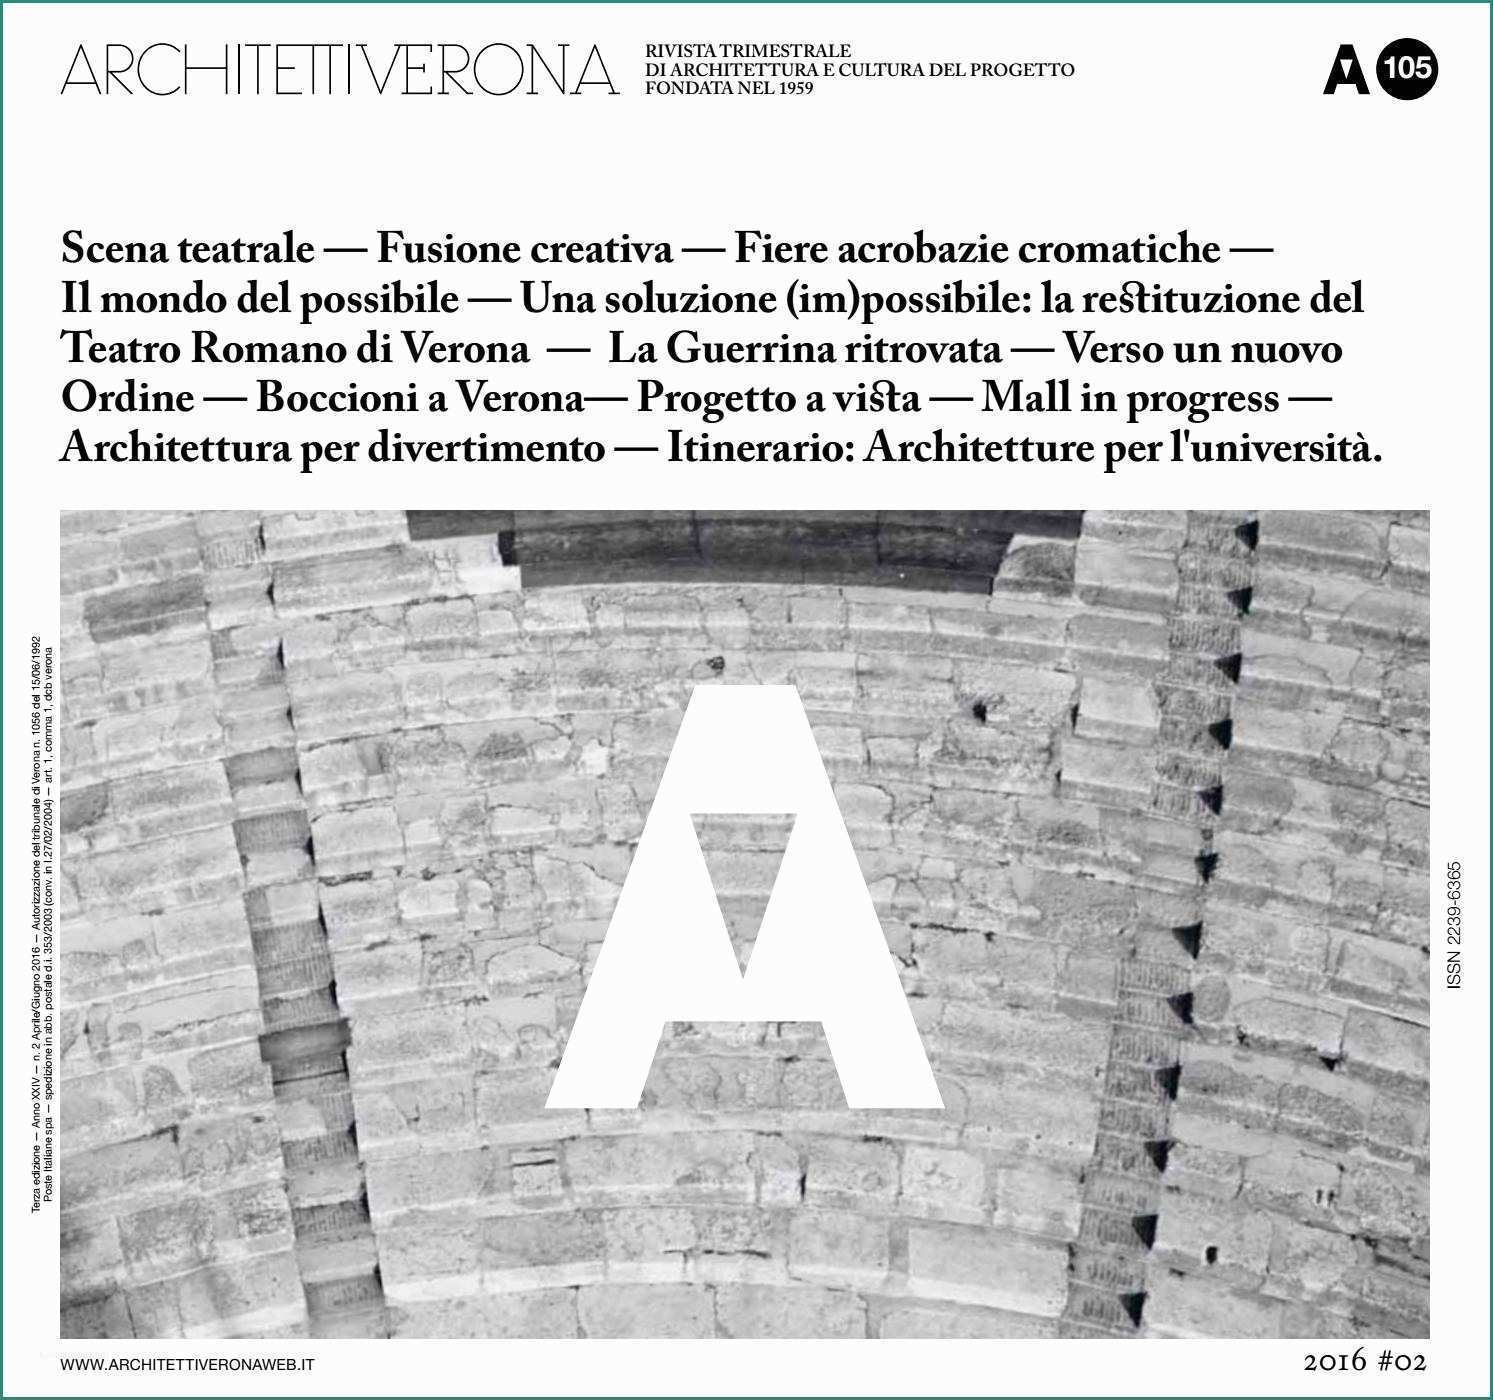 Cancelli Scorrevoli Dwg E Architettiverona 105 by Architettiverona issuu